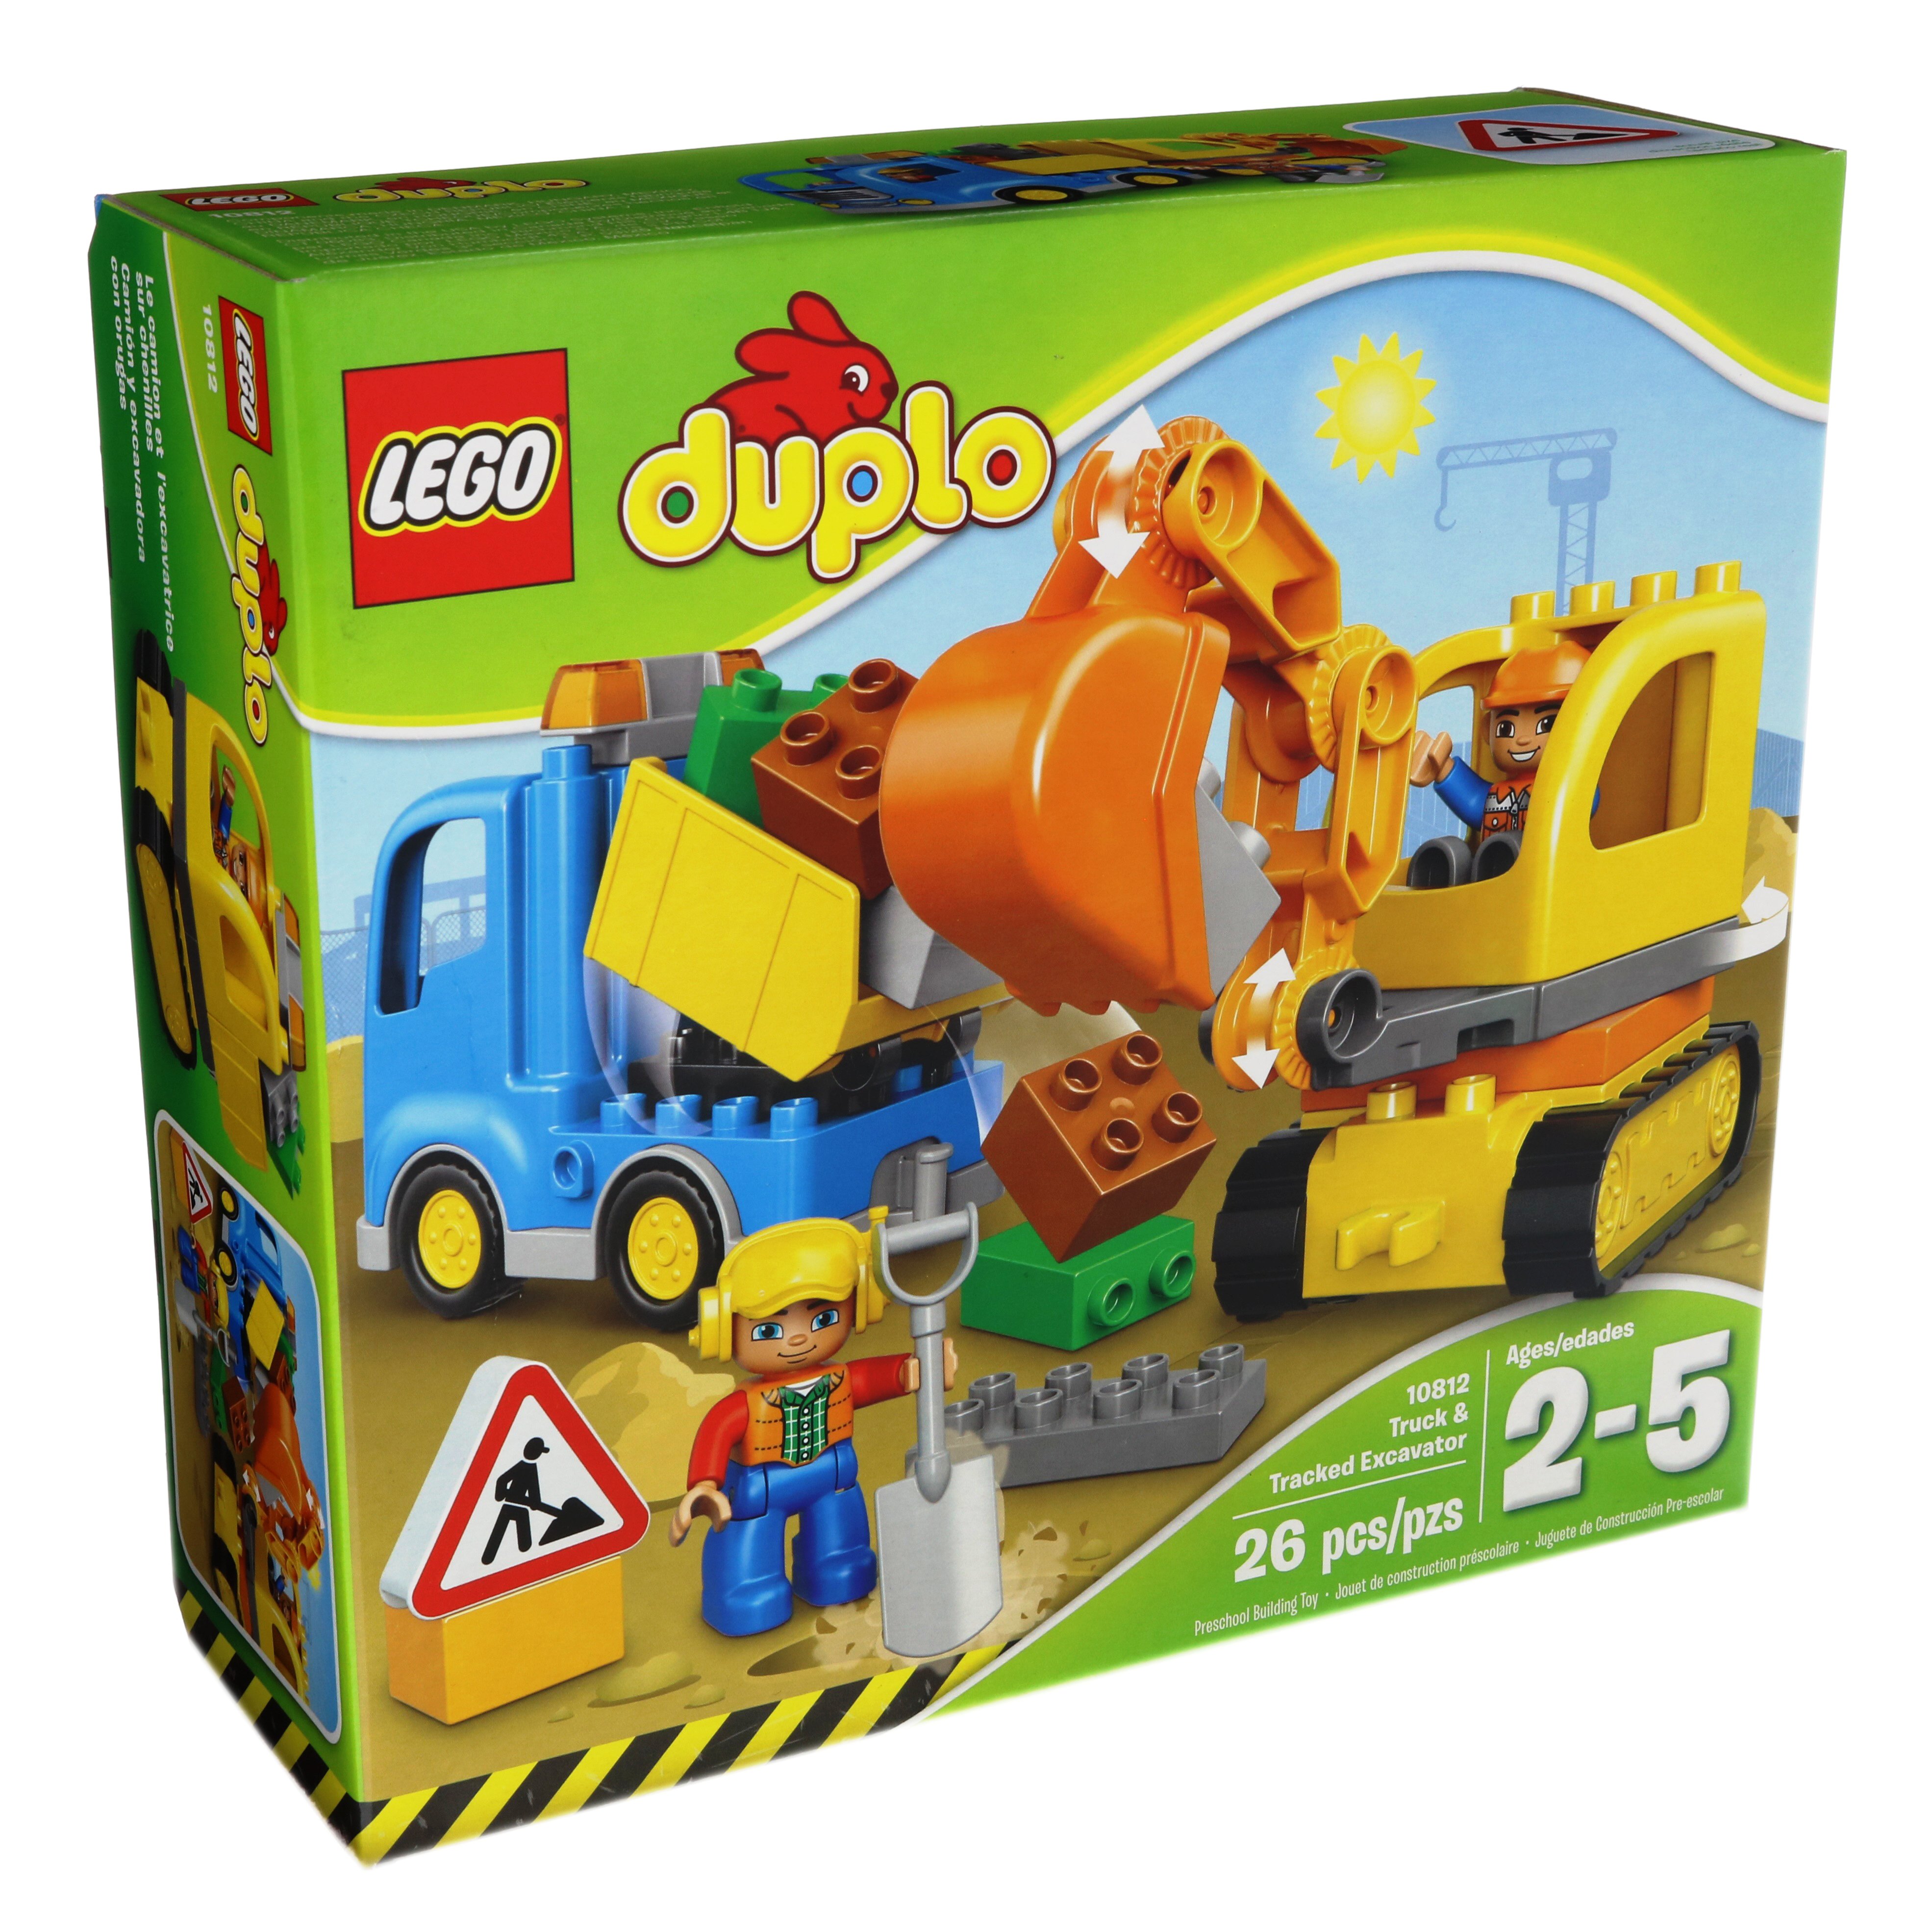 Selskab tyran bønner LEGO DUPLO Truck & Tracked Excavator - Shop Lego & Building Blocks at H-E-B